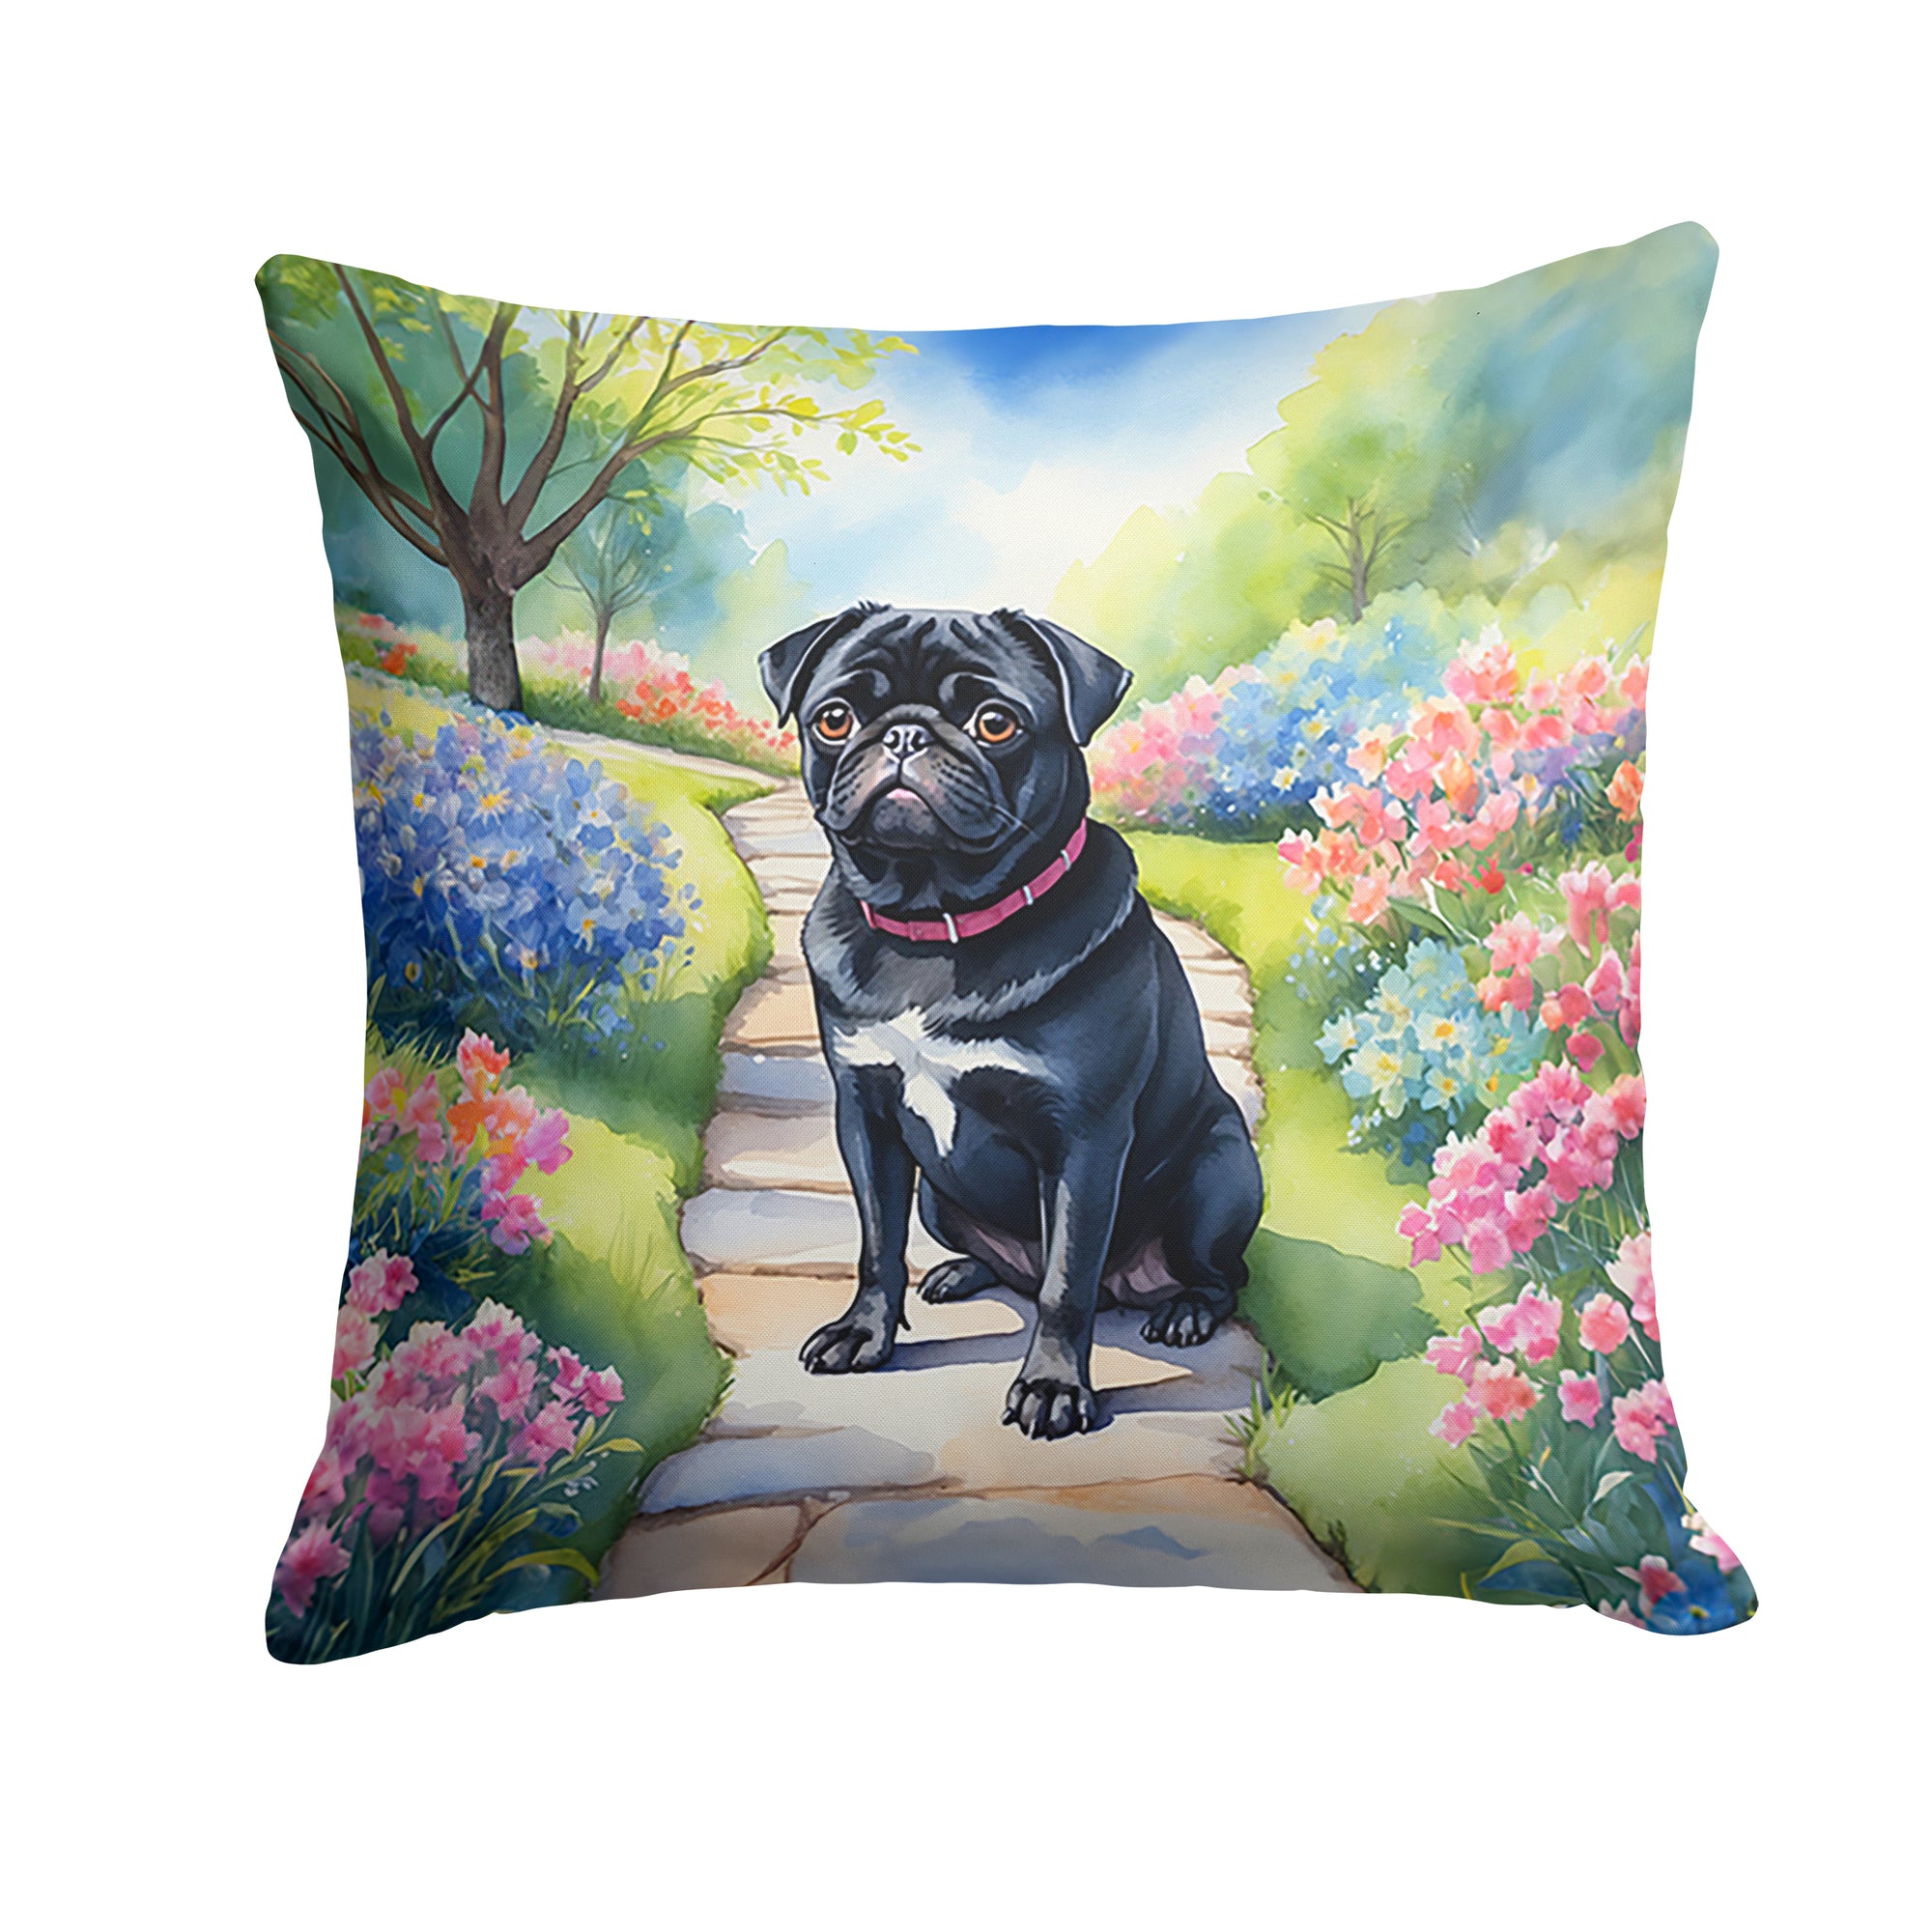 Buy this Black Pug Spring Path Throw Pillow